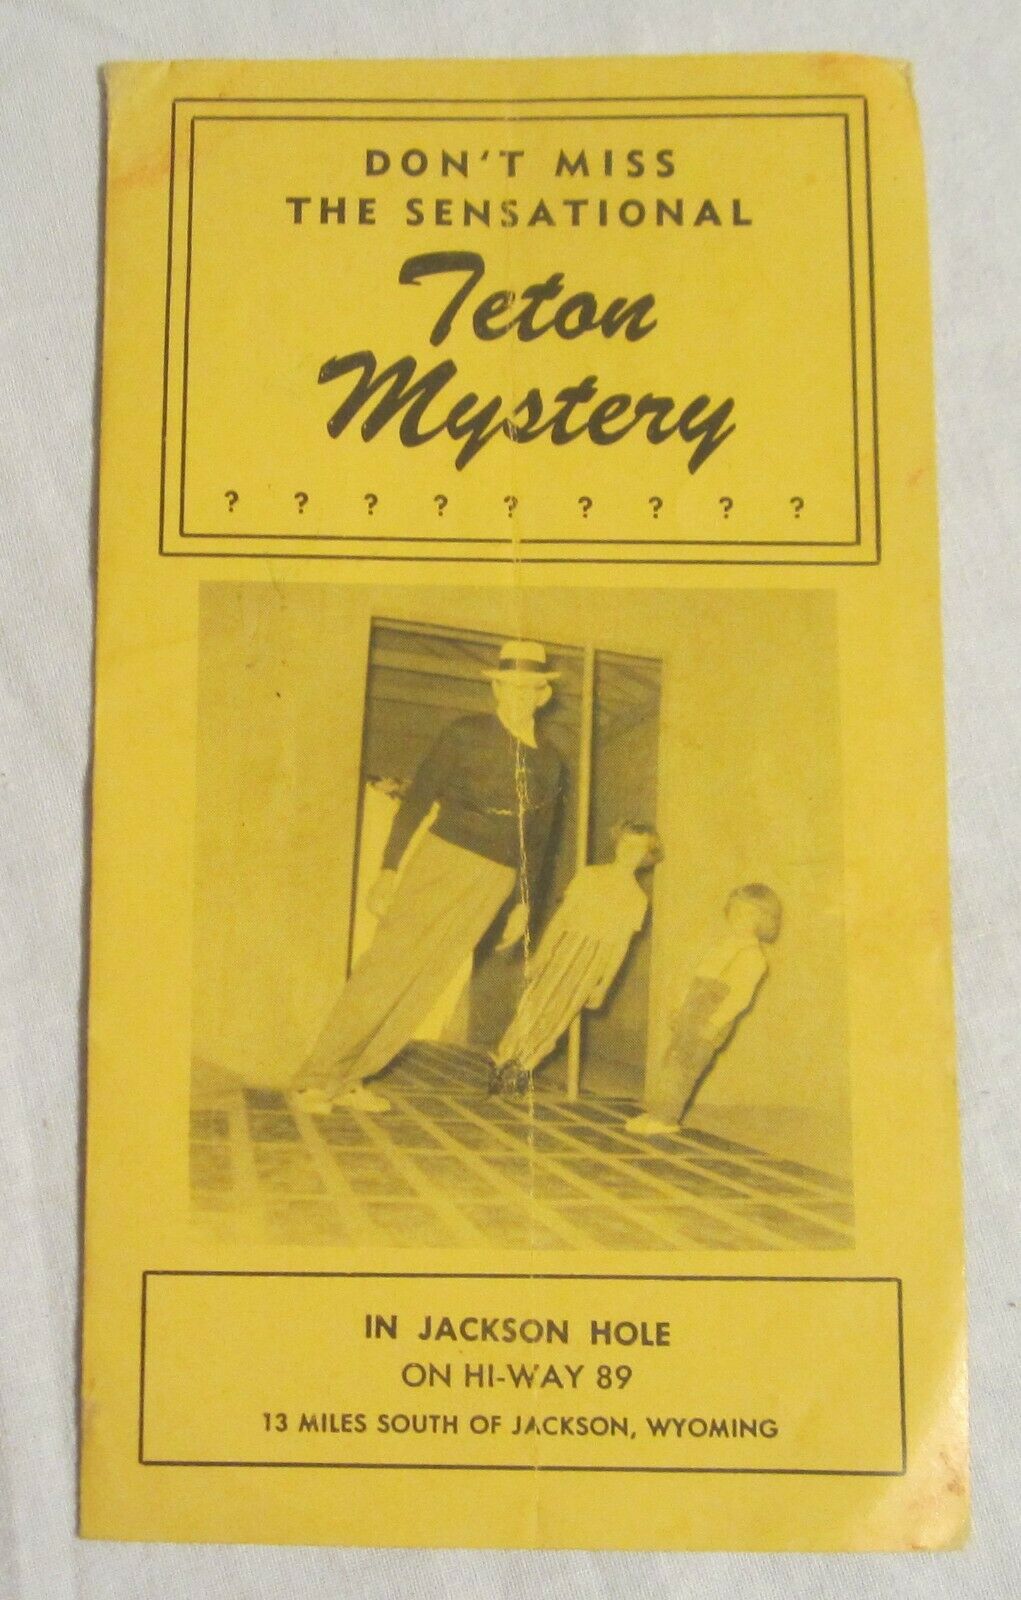 Teton Mystery Brochure -- Jackson Hole, Wyoming -- 1950's